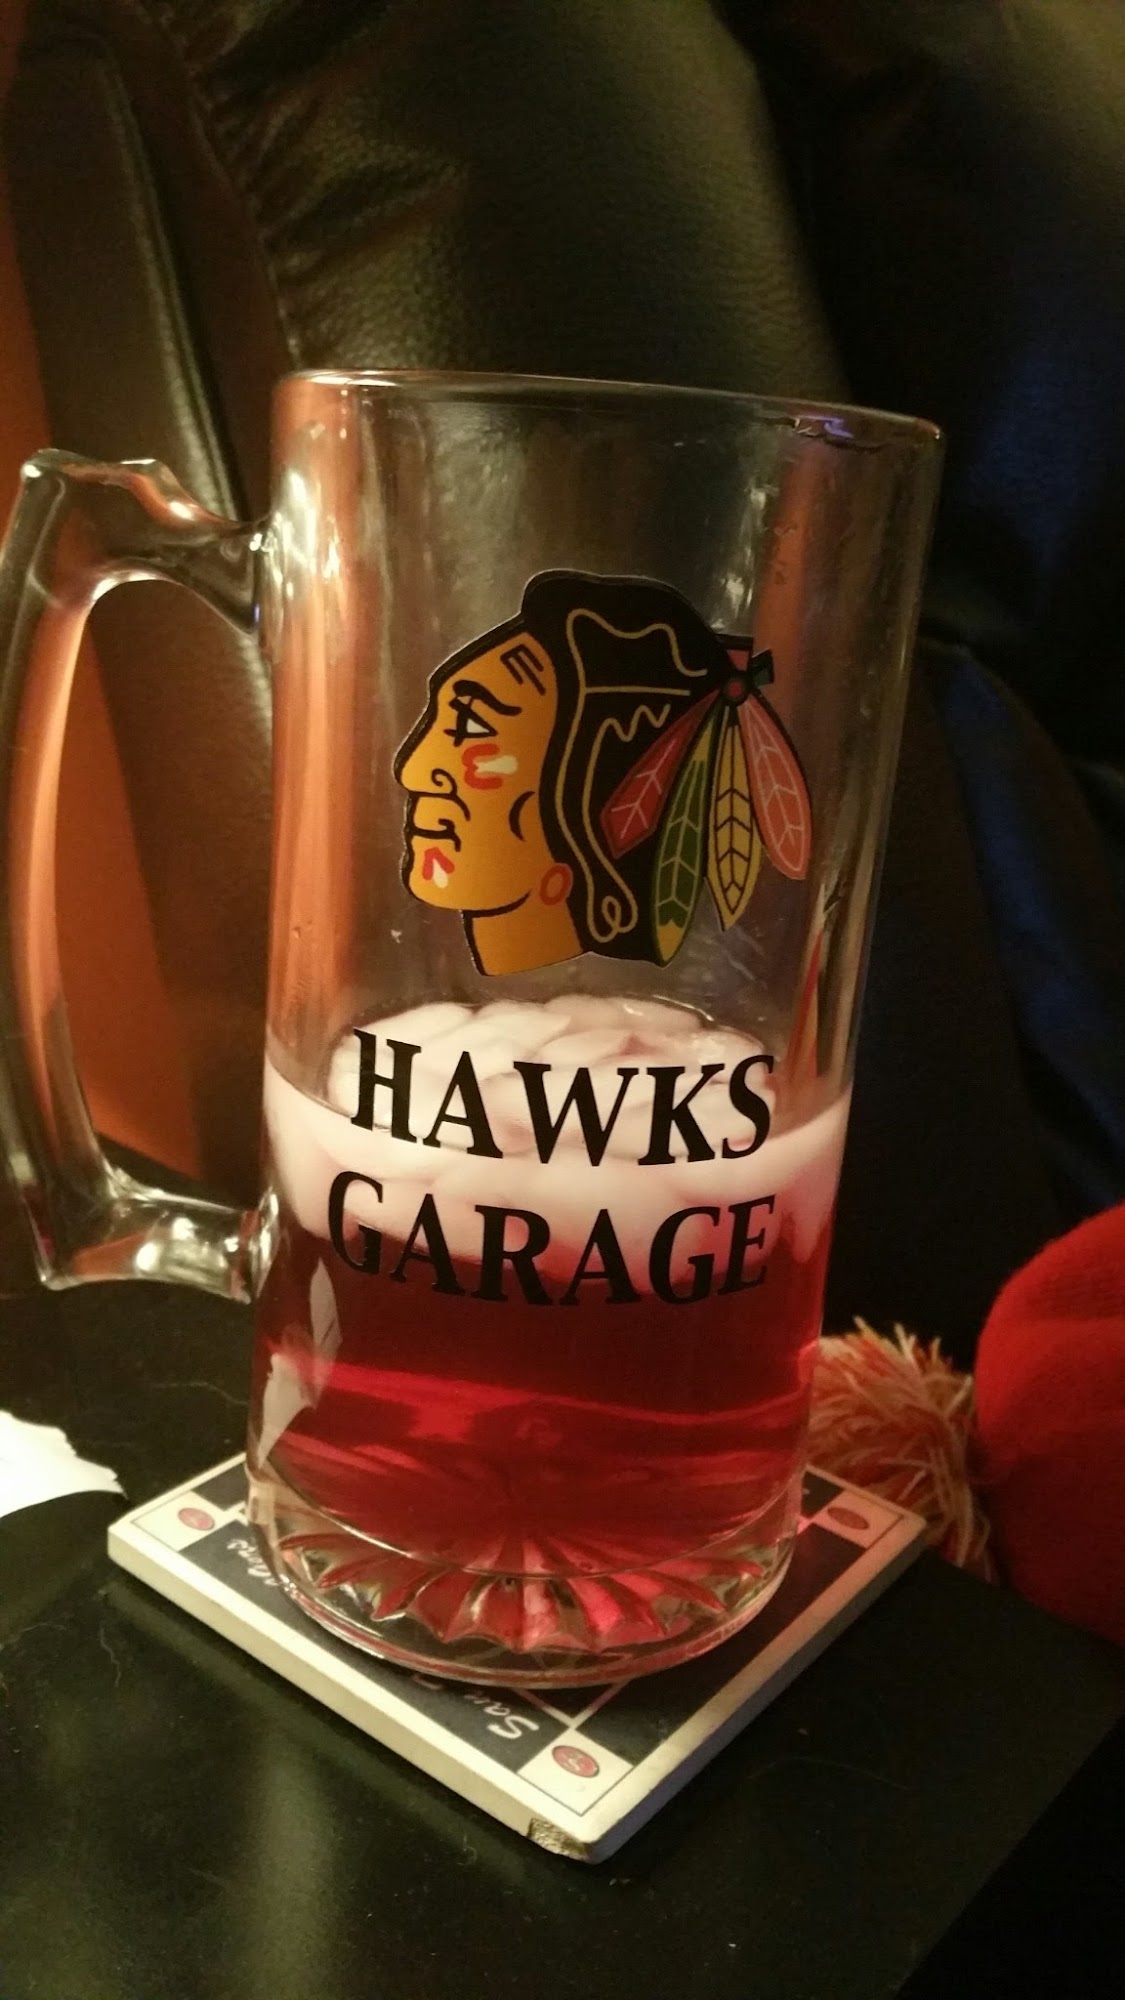 The Hawks Garage